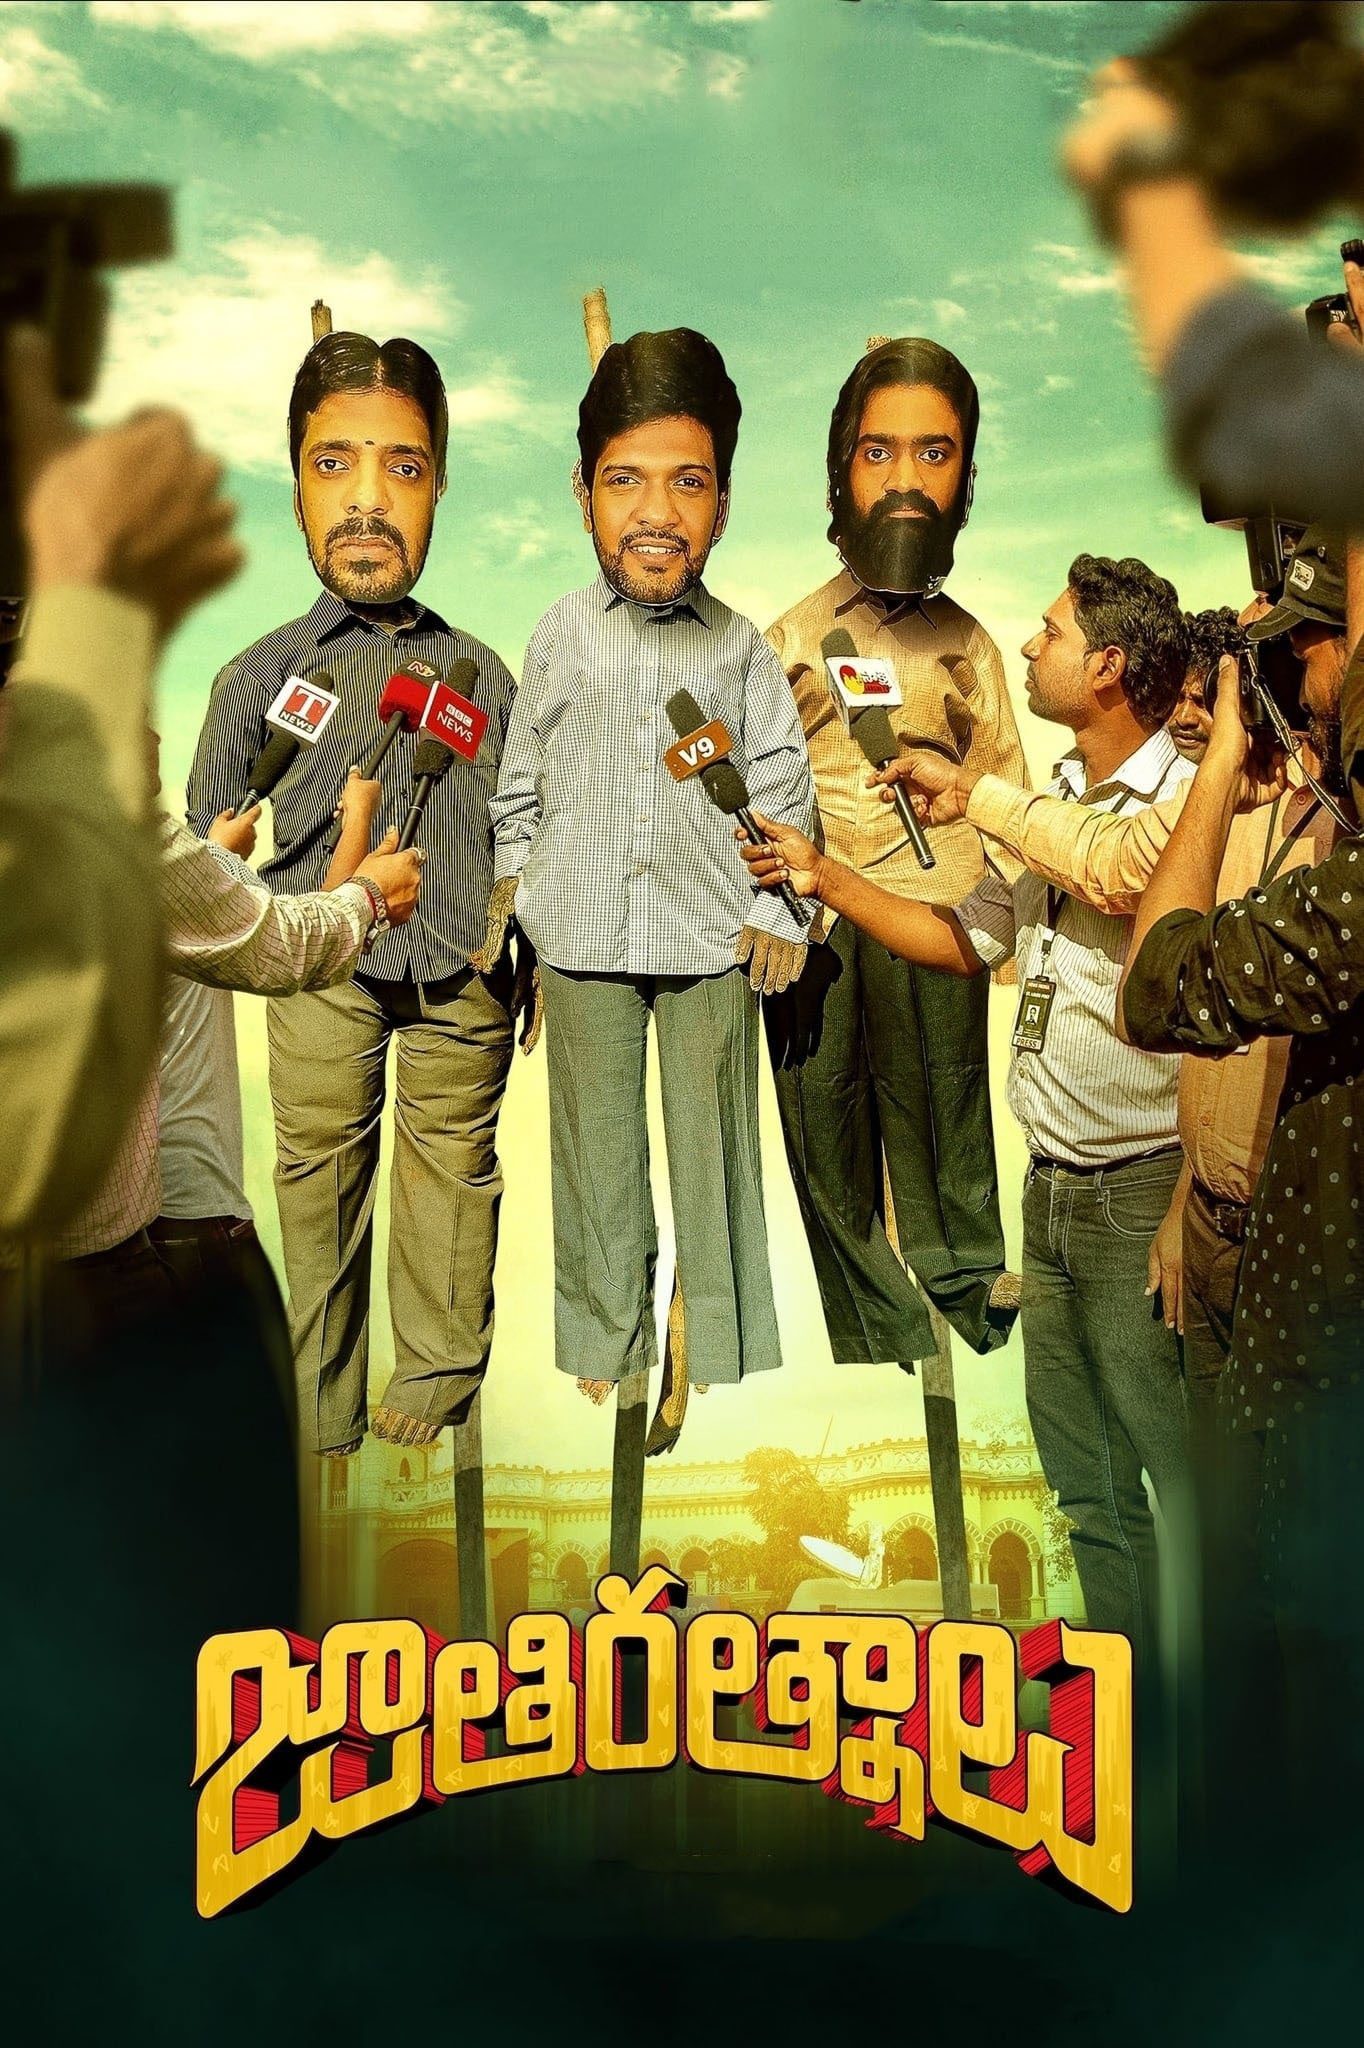 Poster for the movie "Jathi Ratnalu"